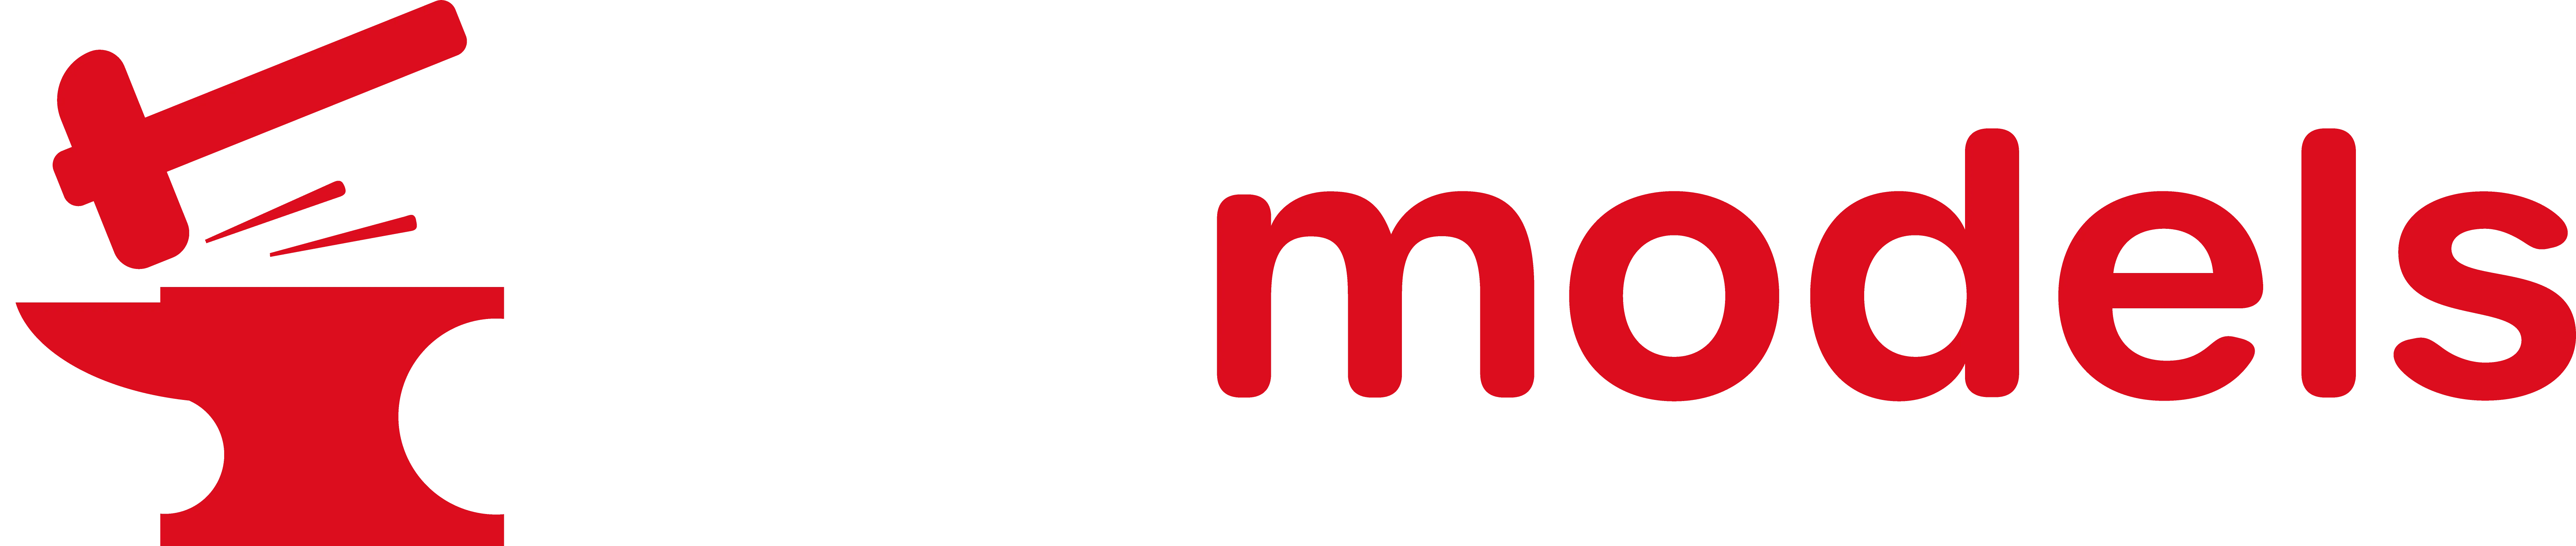 The MCModels logo